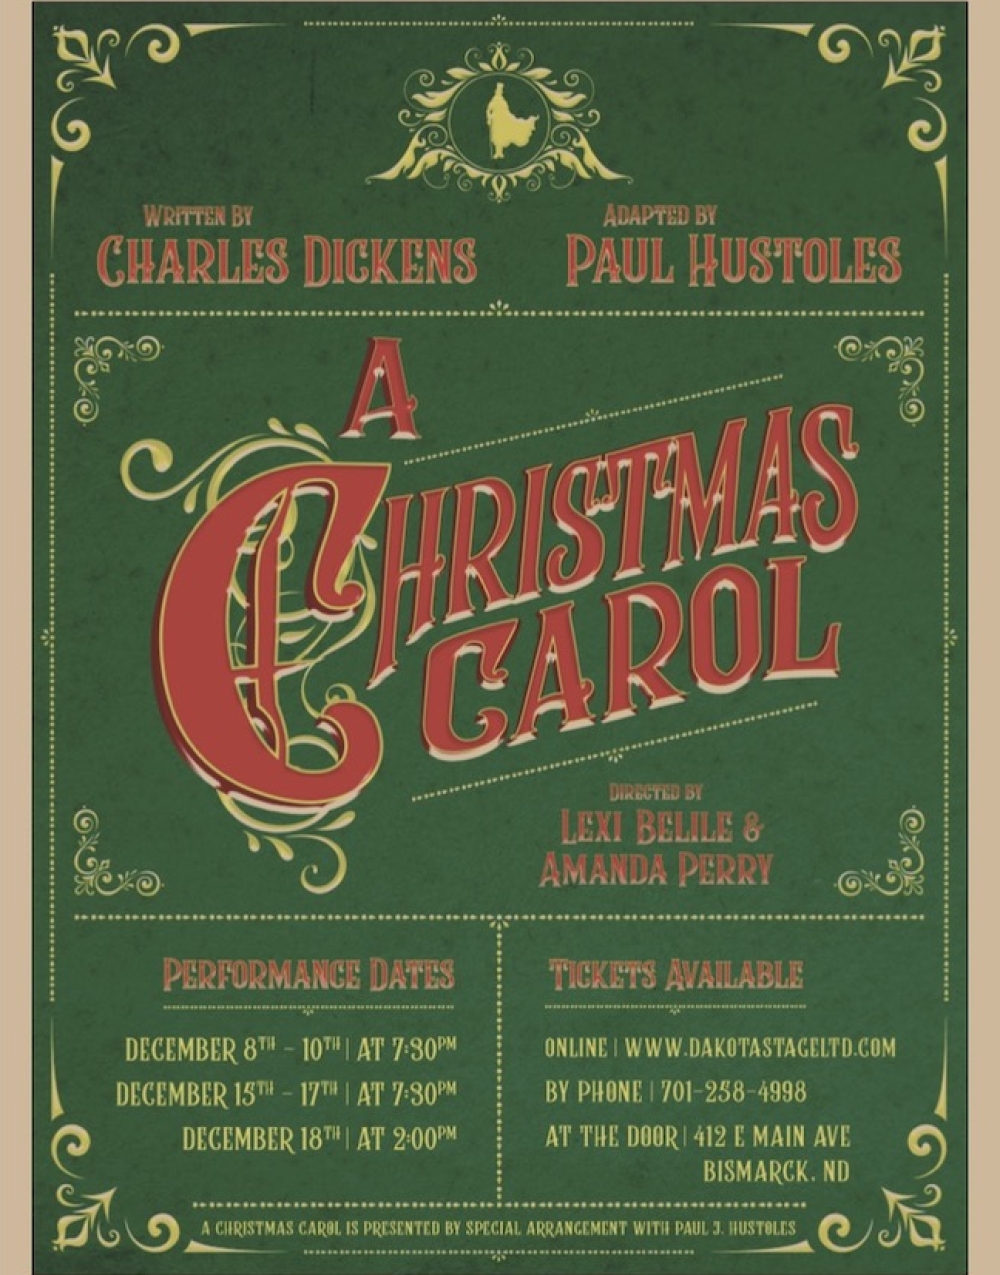 A Christmas Carol - Dakota Stage, Ltd. Stage Mag